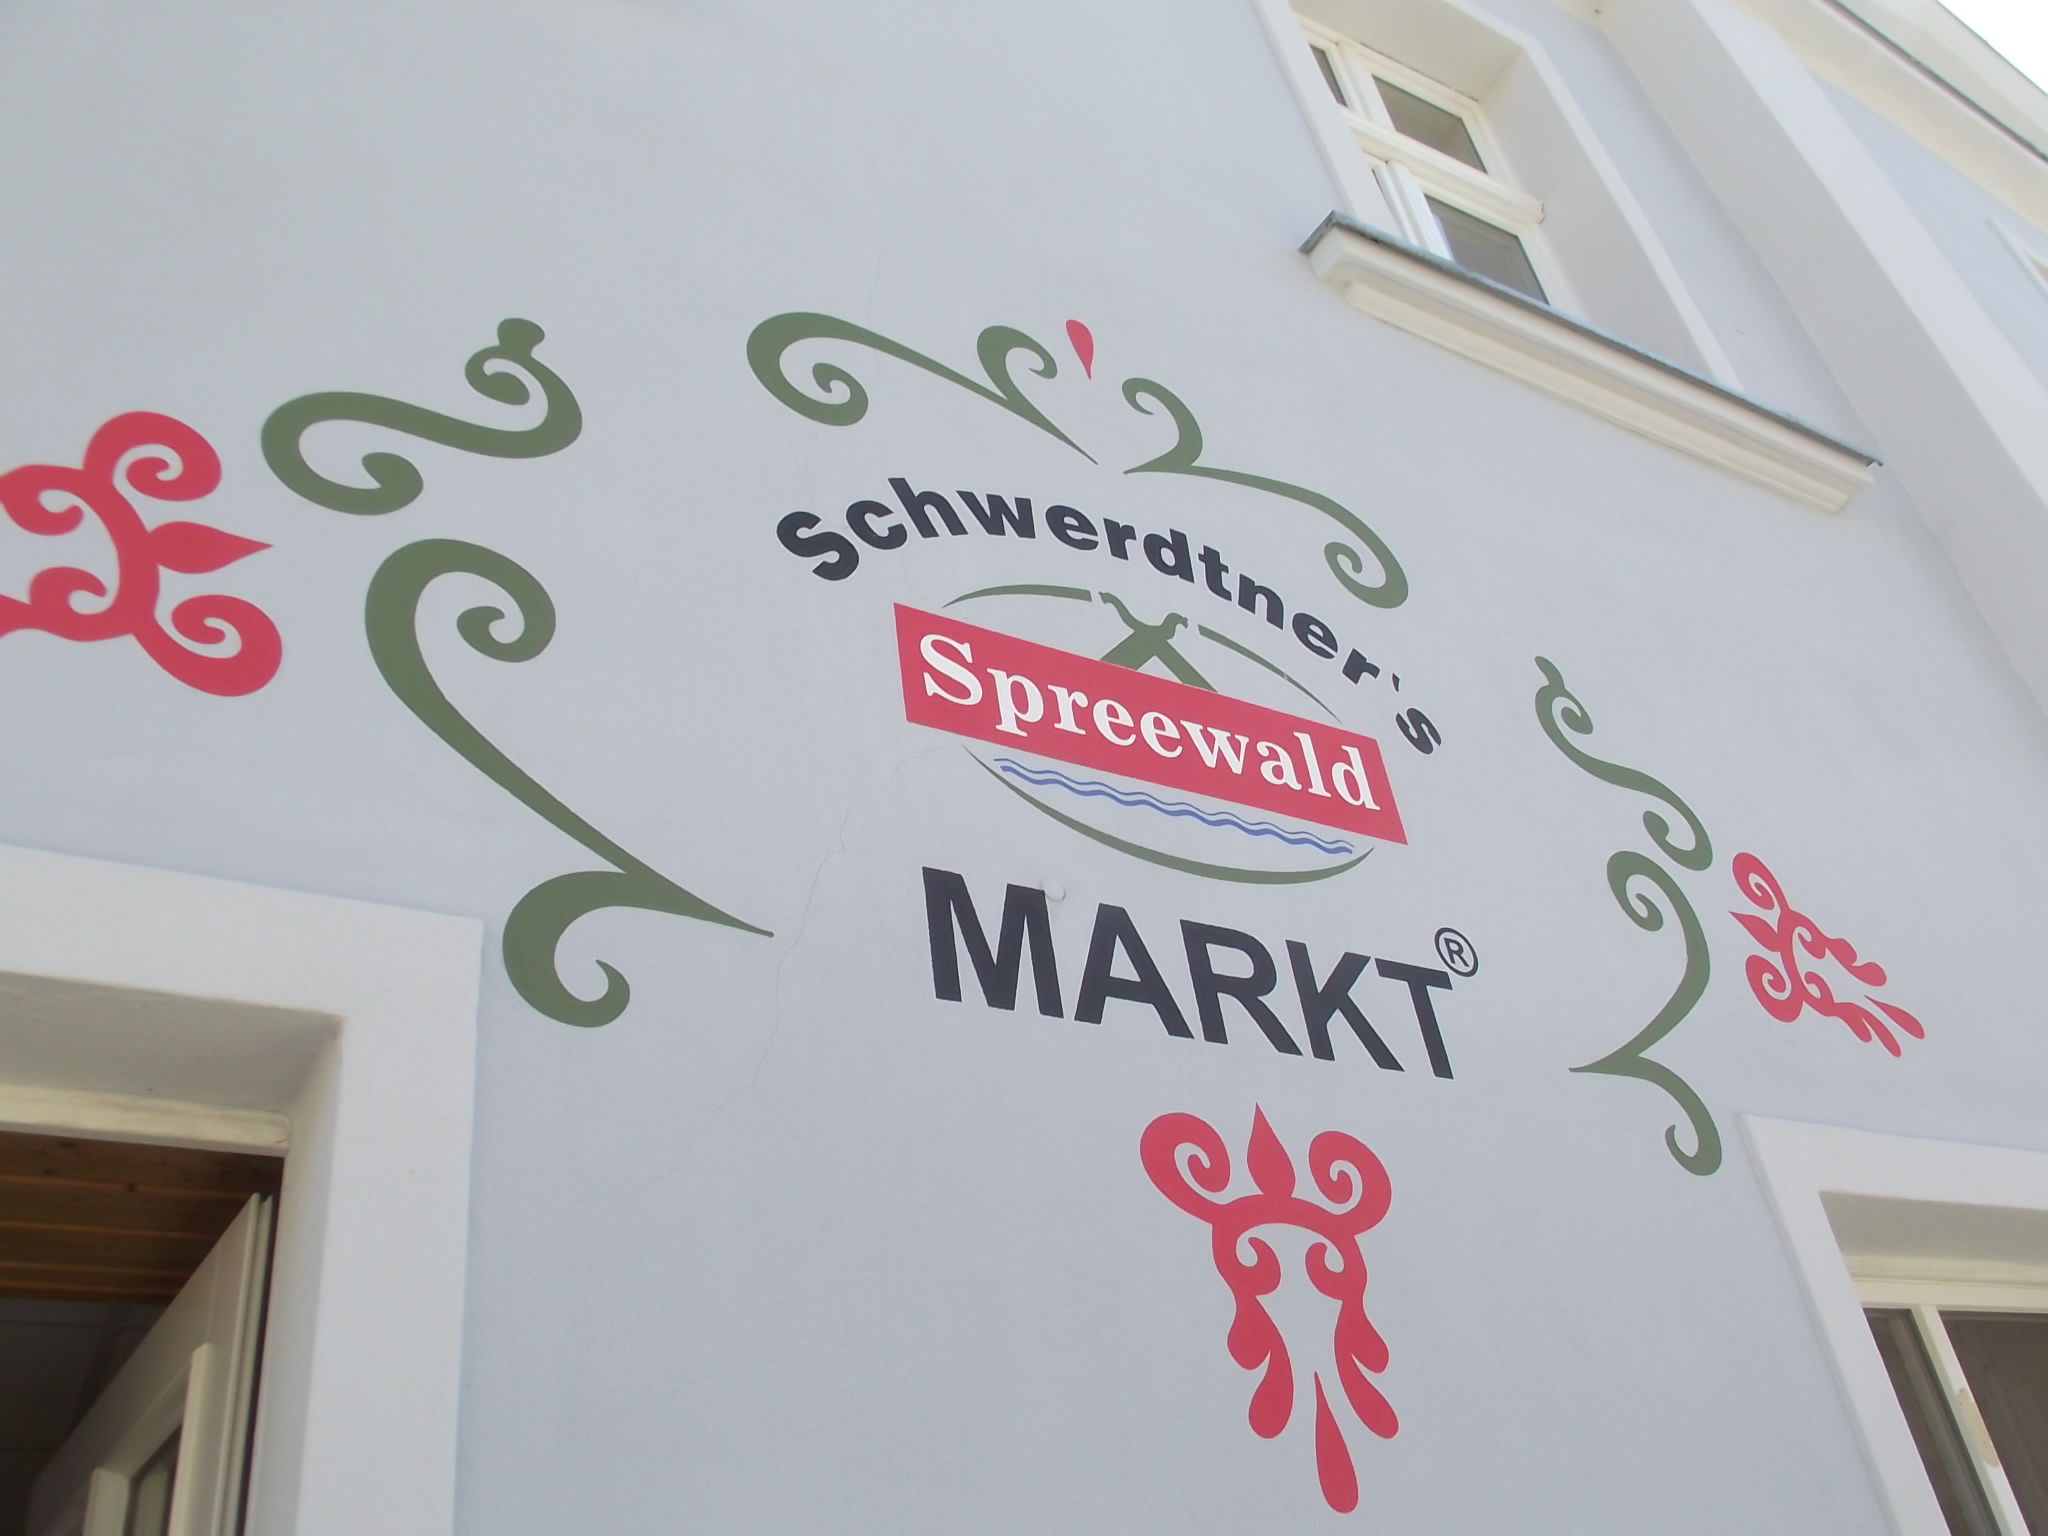 Bild 1 Schwerdtners Spreewaldmarkt in Lübbenau/Spreewald